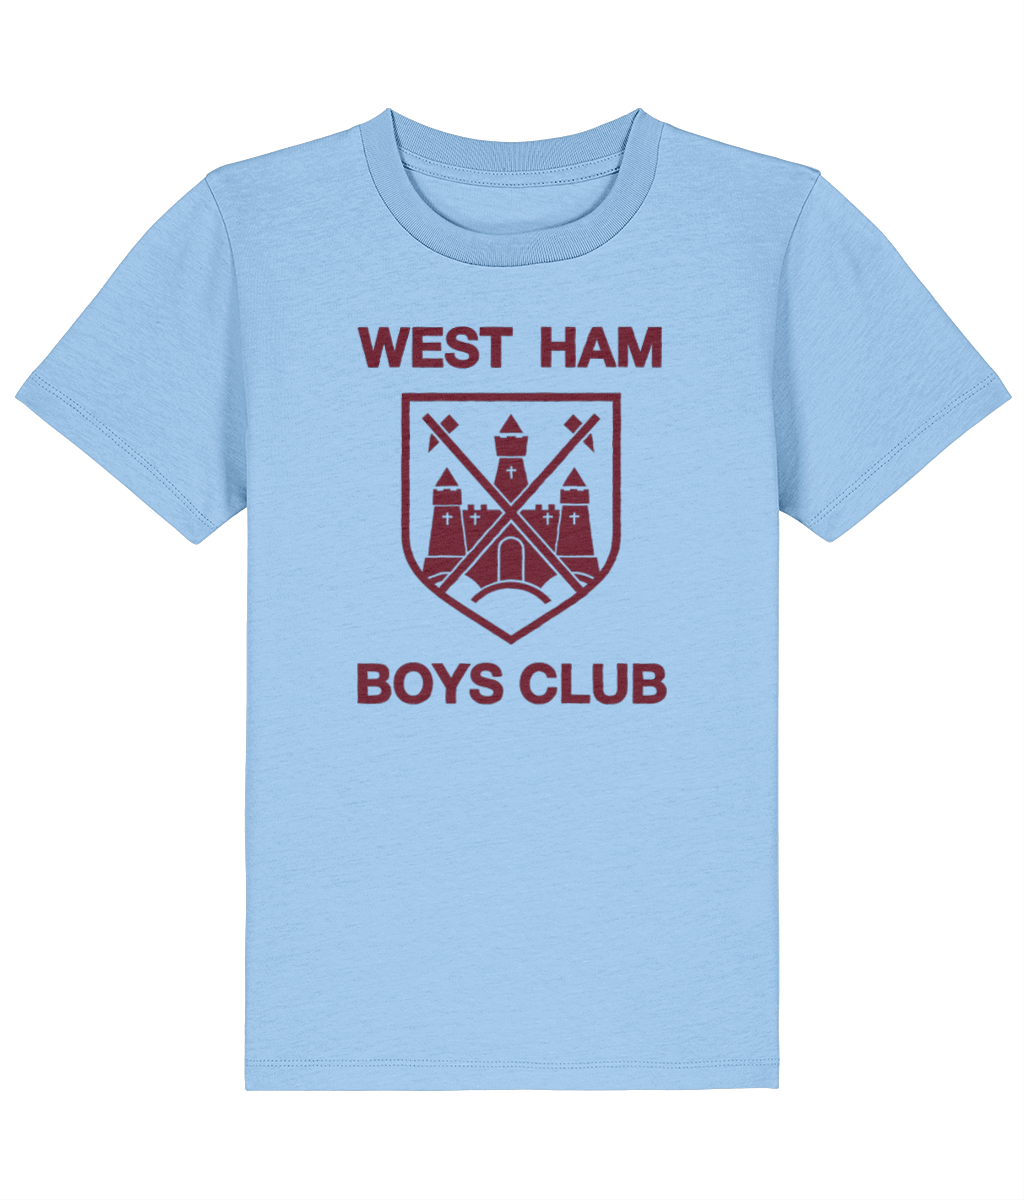 West Ham Boys Club - Kids